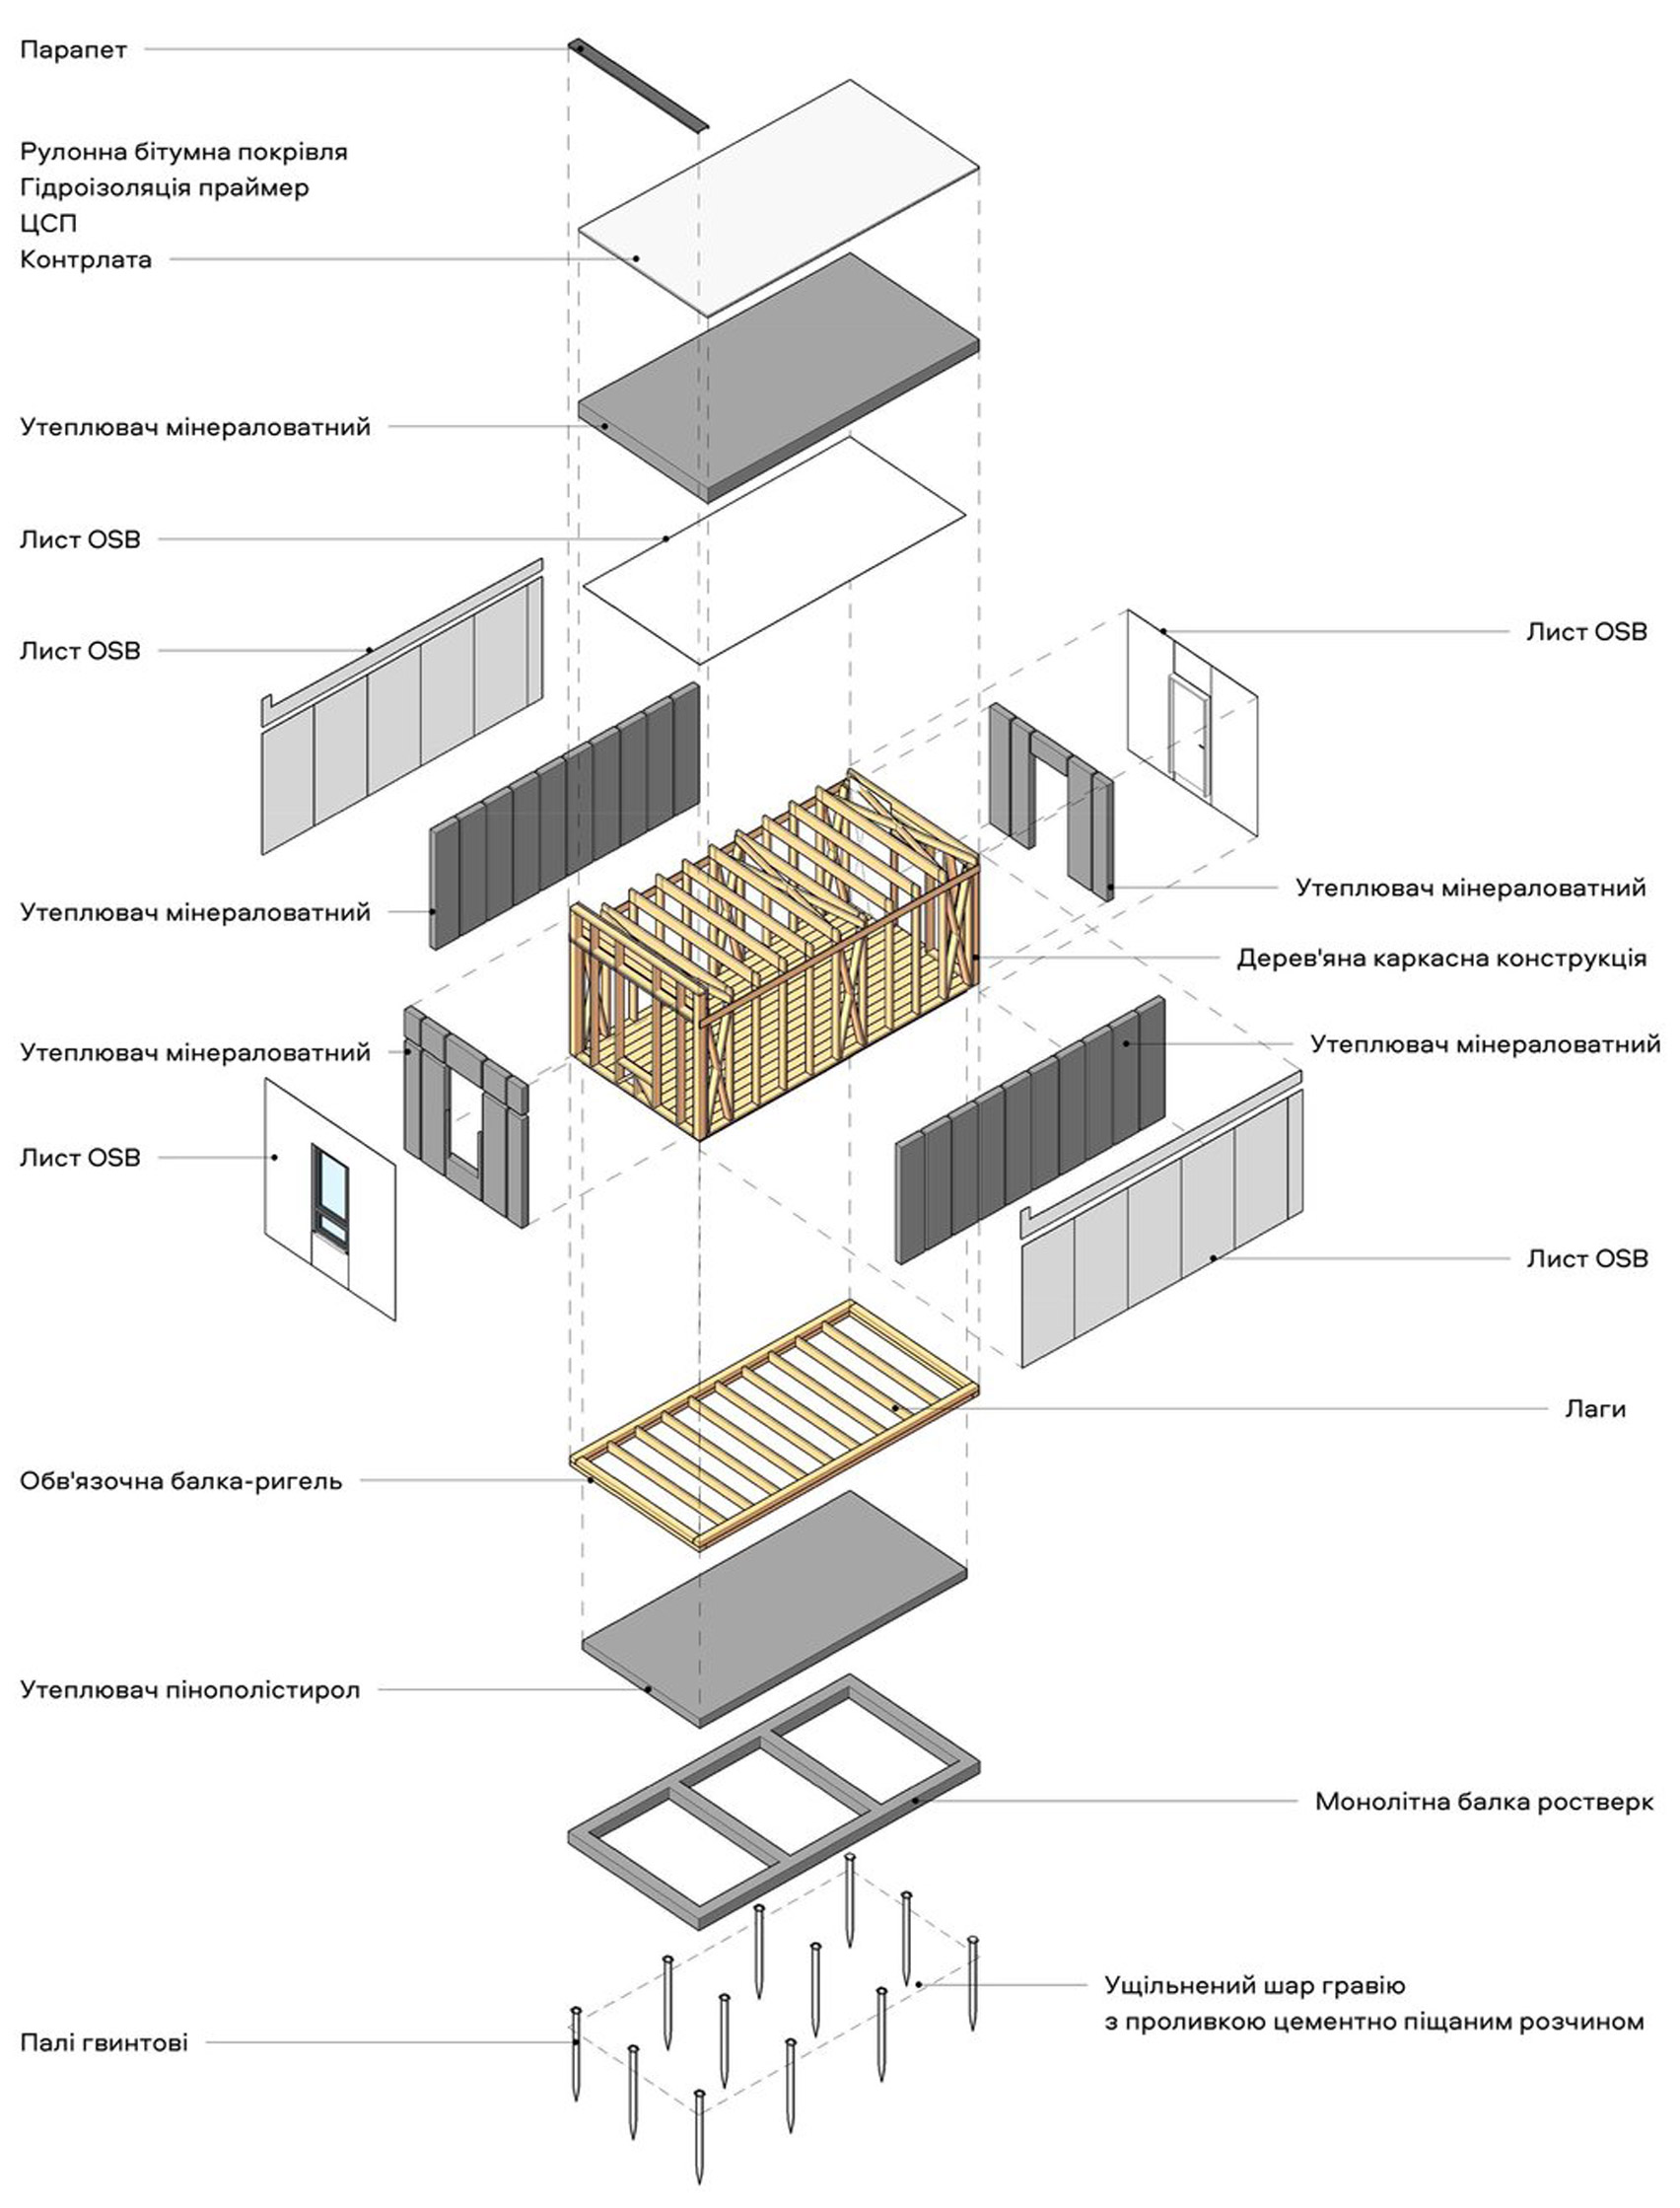 Anatomy of housing module in Re:Ukraine temporary settlement